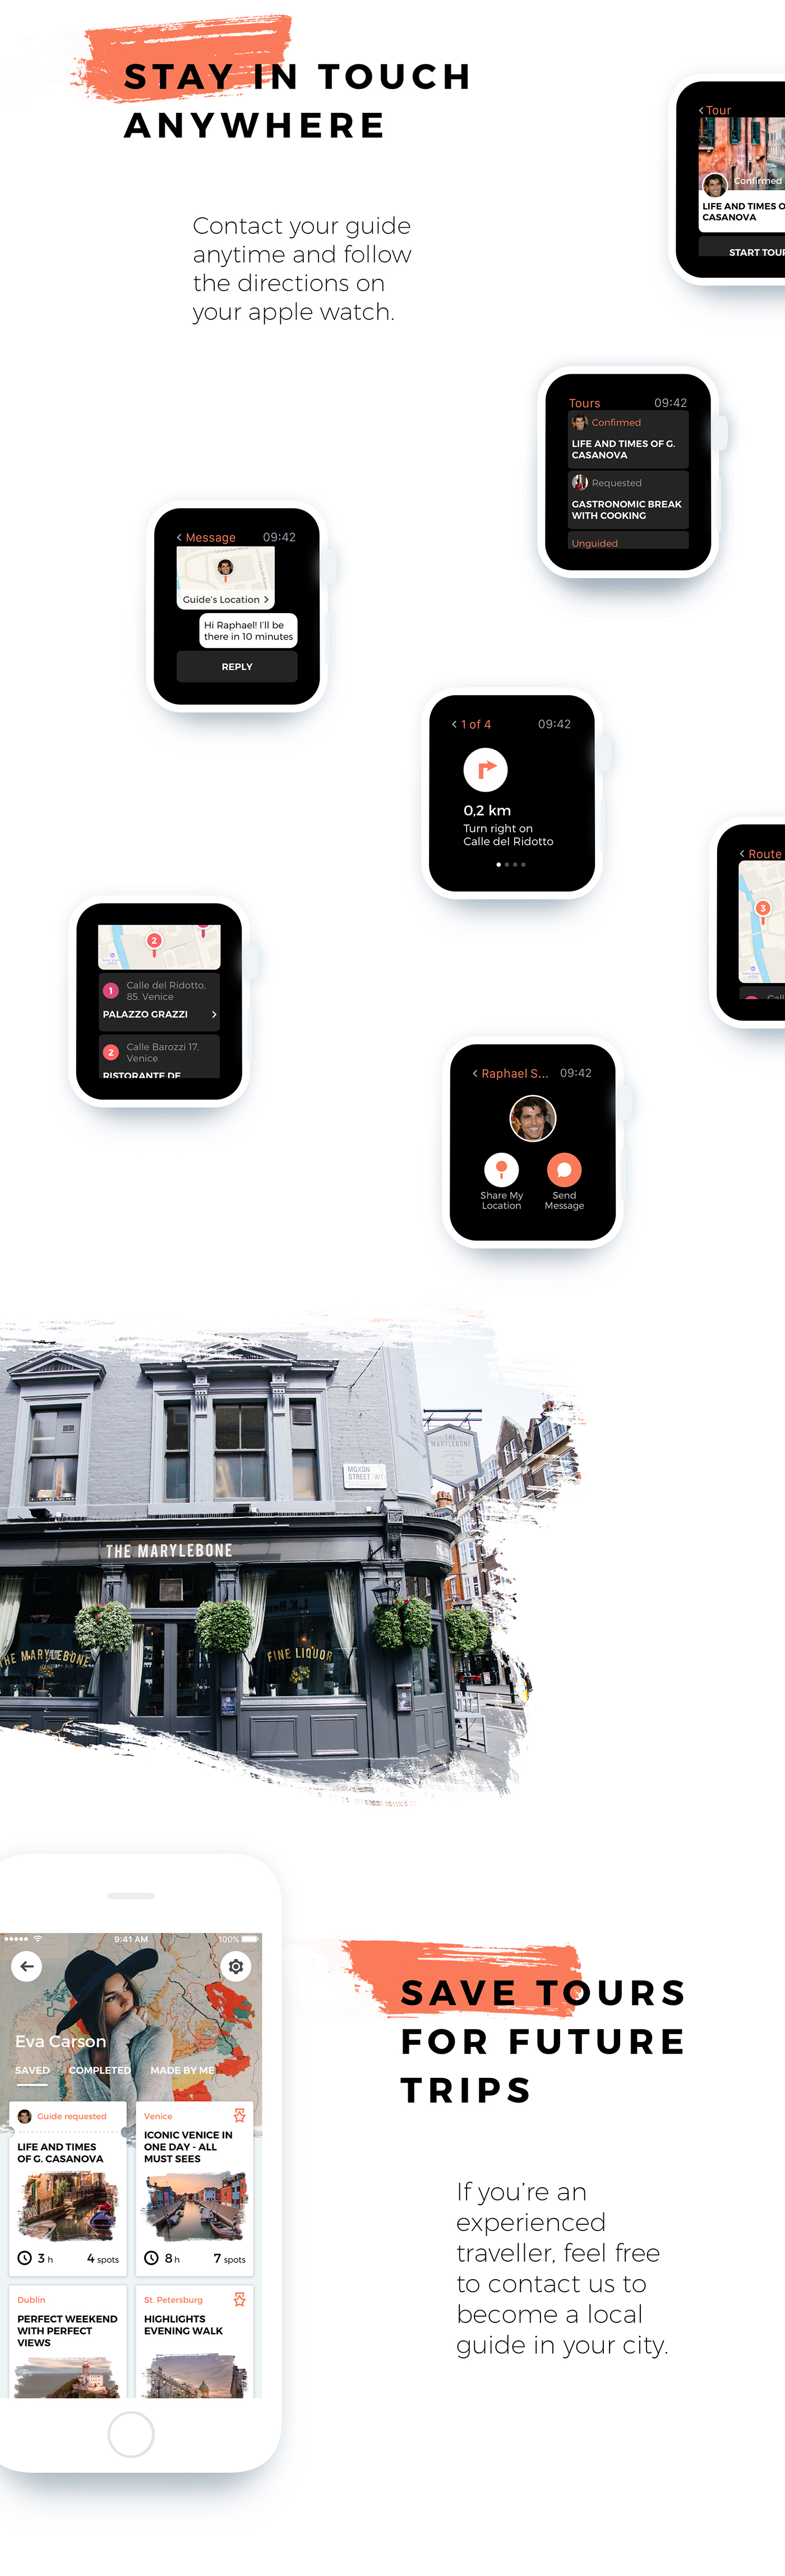 Travel ios app iphone UI ux interaction tour Guide trip Interface mobile social explore application